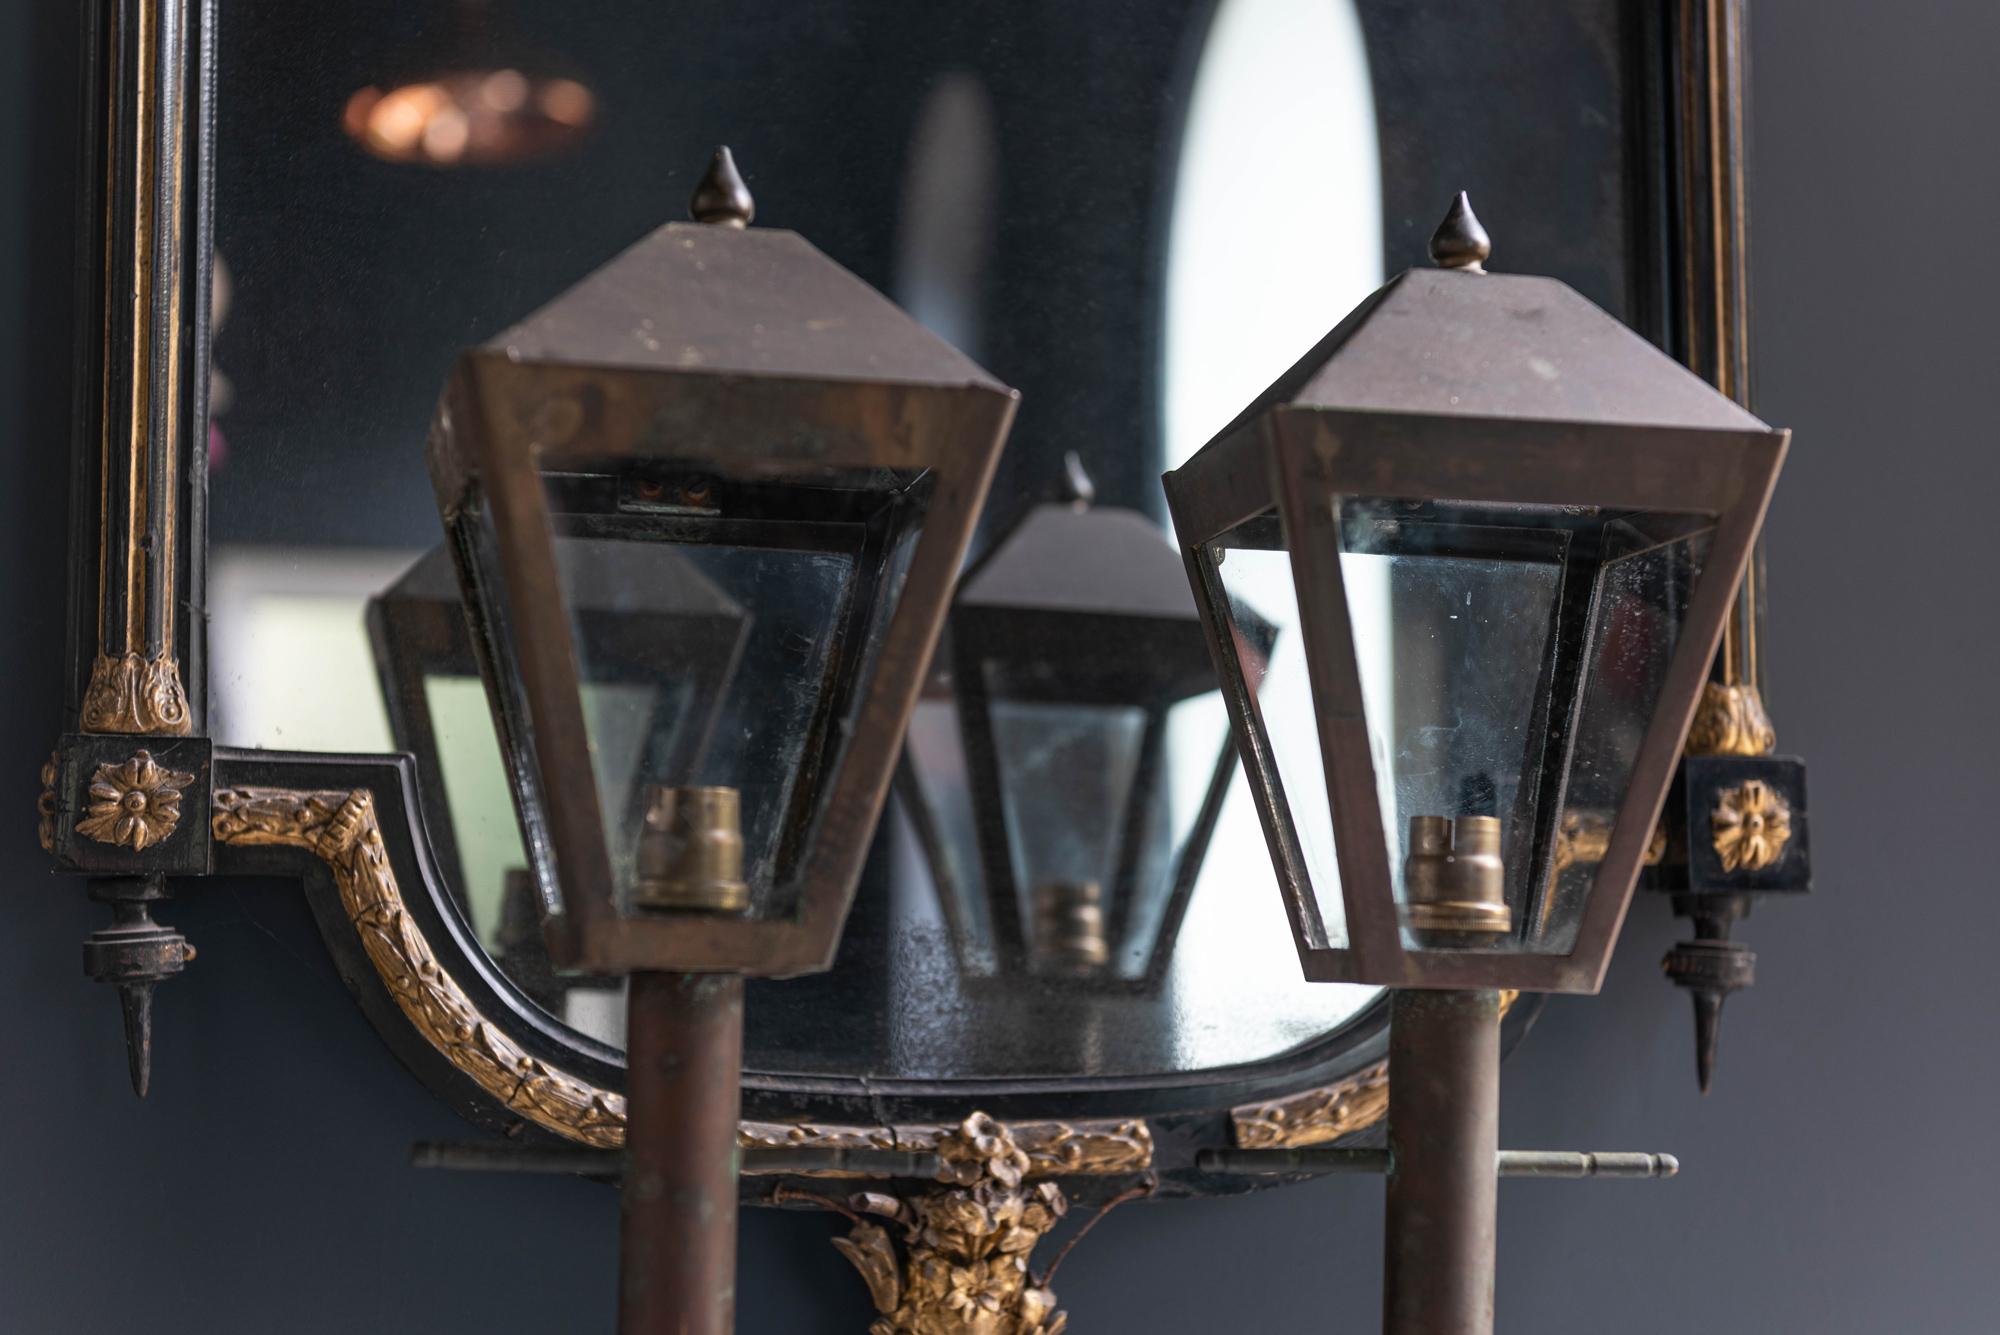 Pair of 19th century English brass pillar lanterns, circa 1890
Lovely dulled patina with signs of verdigris.